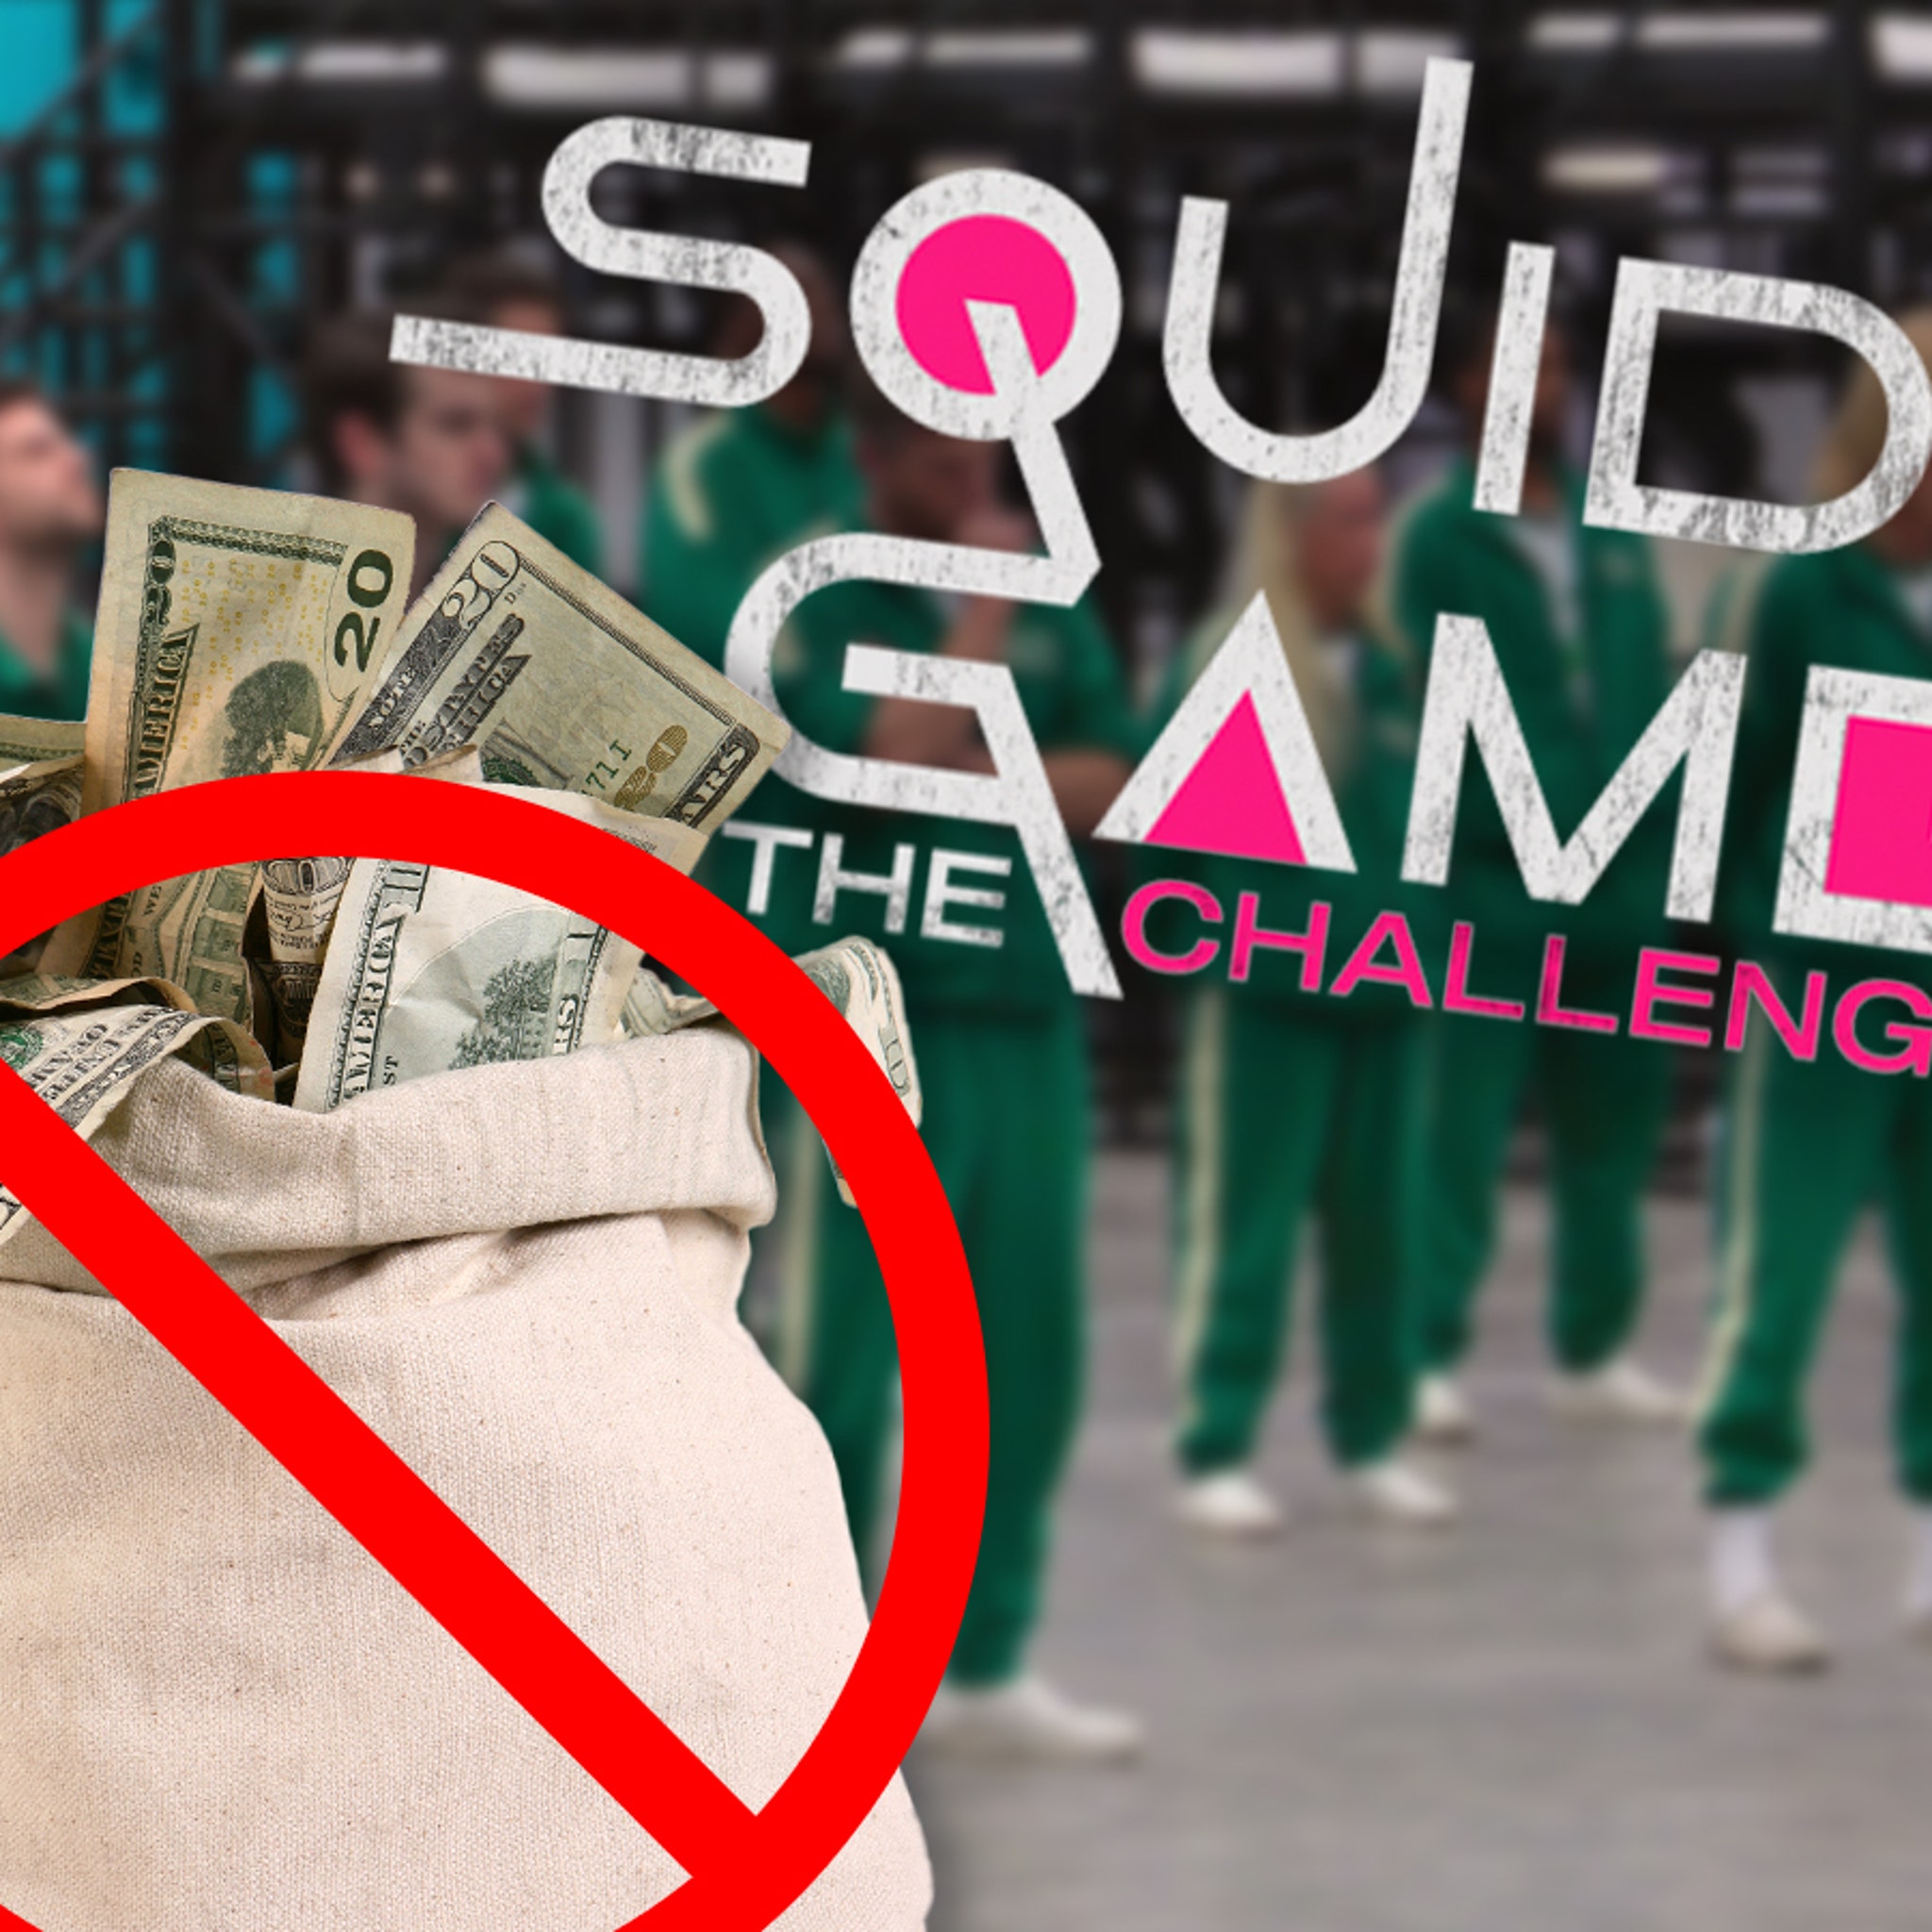 Squid Game: The Challenge' Champion Mai Whelan Reveals the Key to Winning